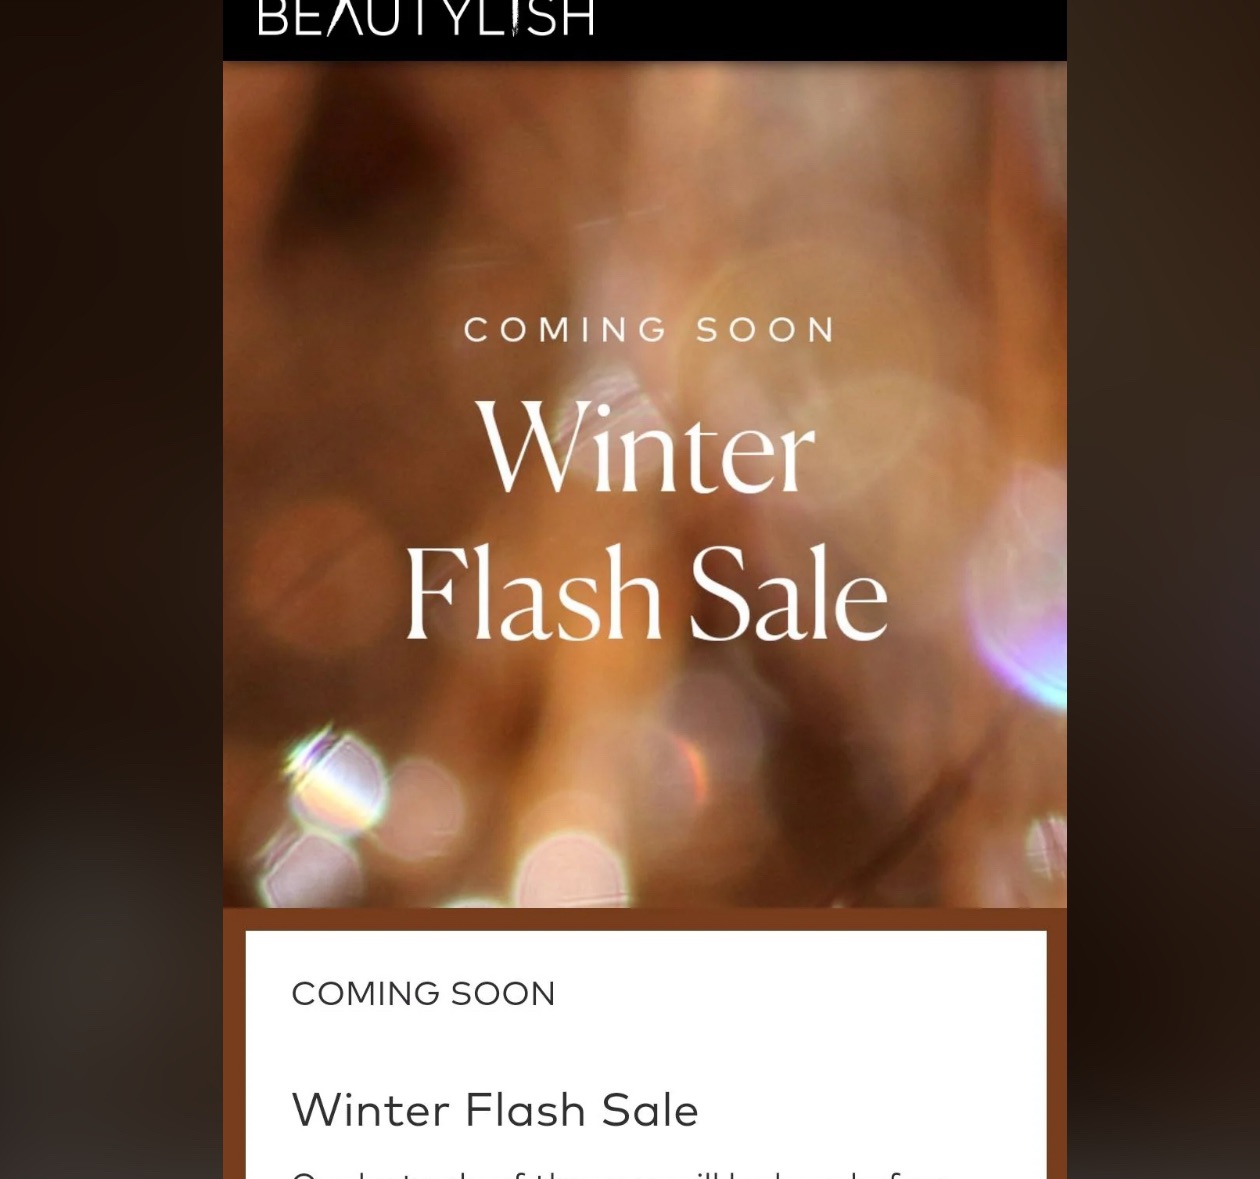 Beautylish Winter Flash Sale 2023 Coming Soon | Beautylish
26号开始大促